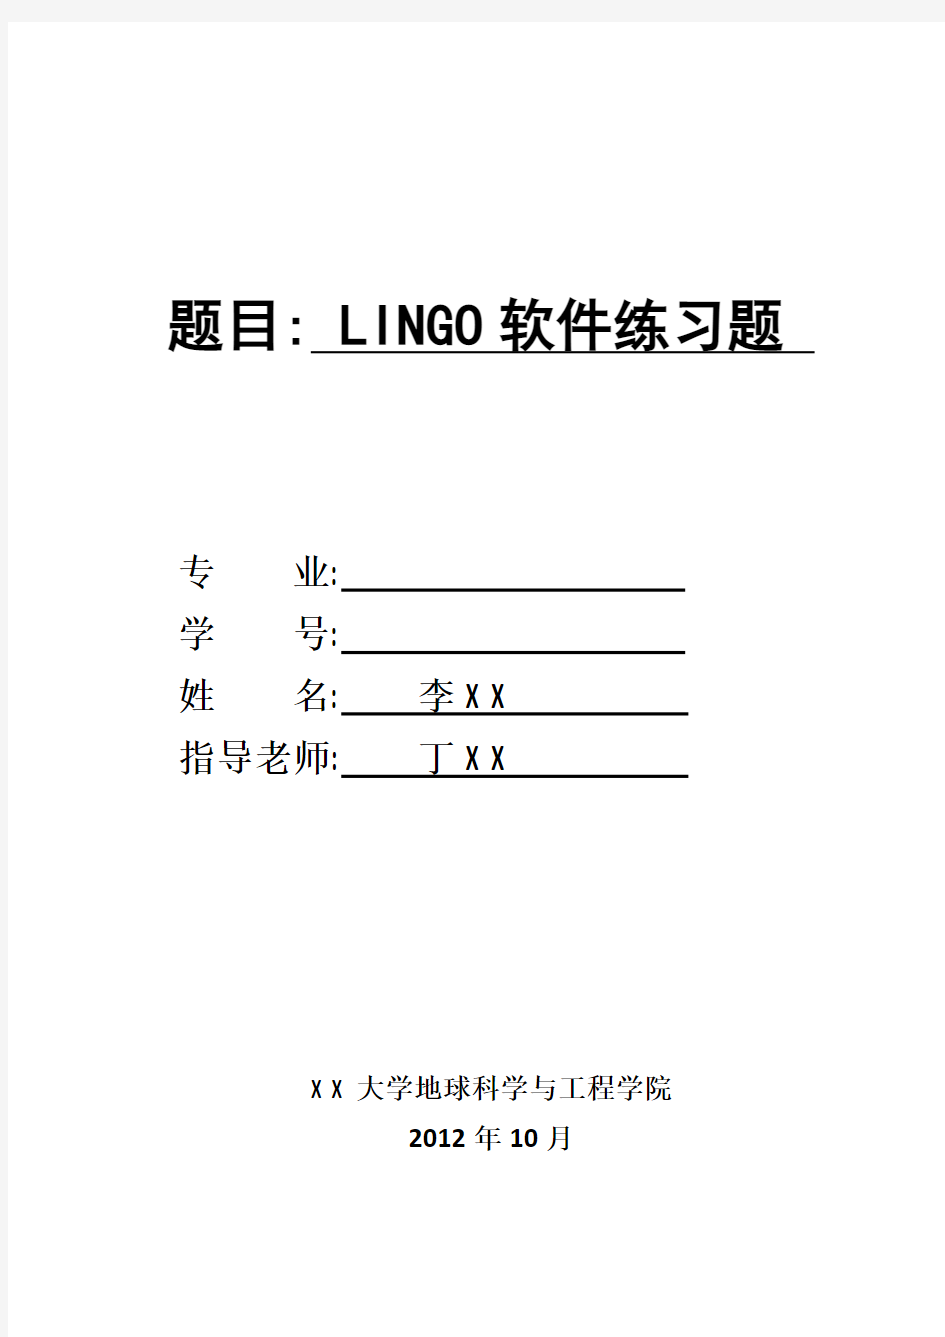 LINGO作业论文—生产优化使利润最大化问题+路灯照明问题